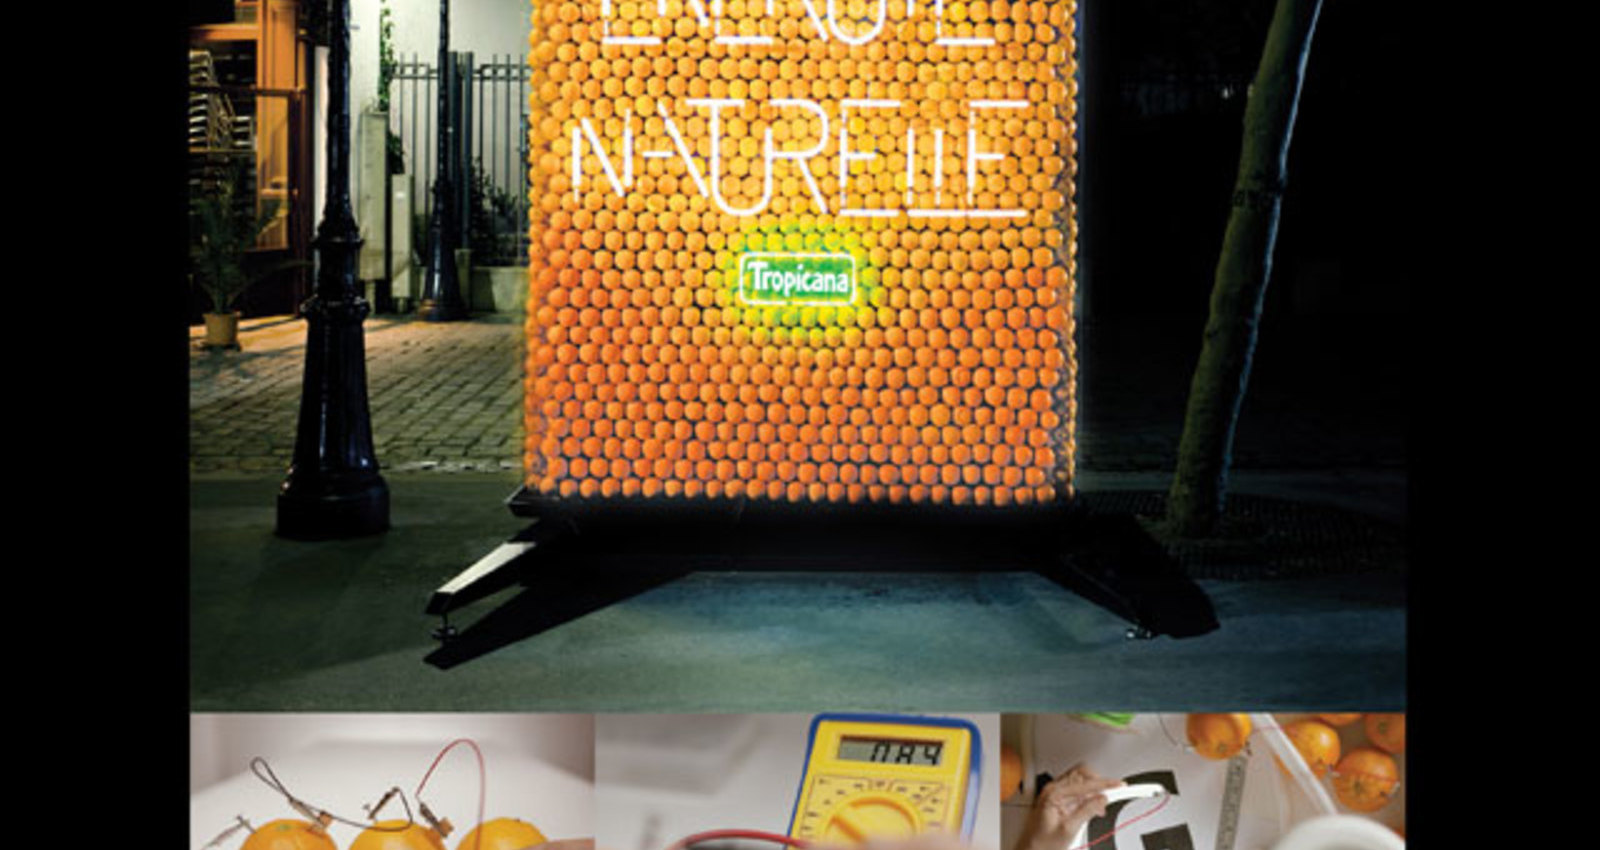 Billboard powered by oranges